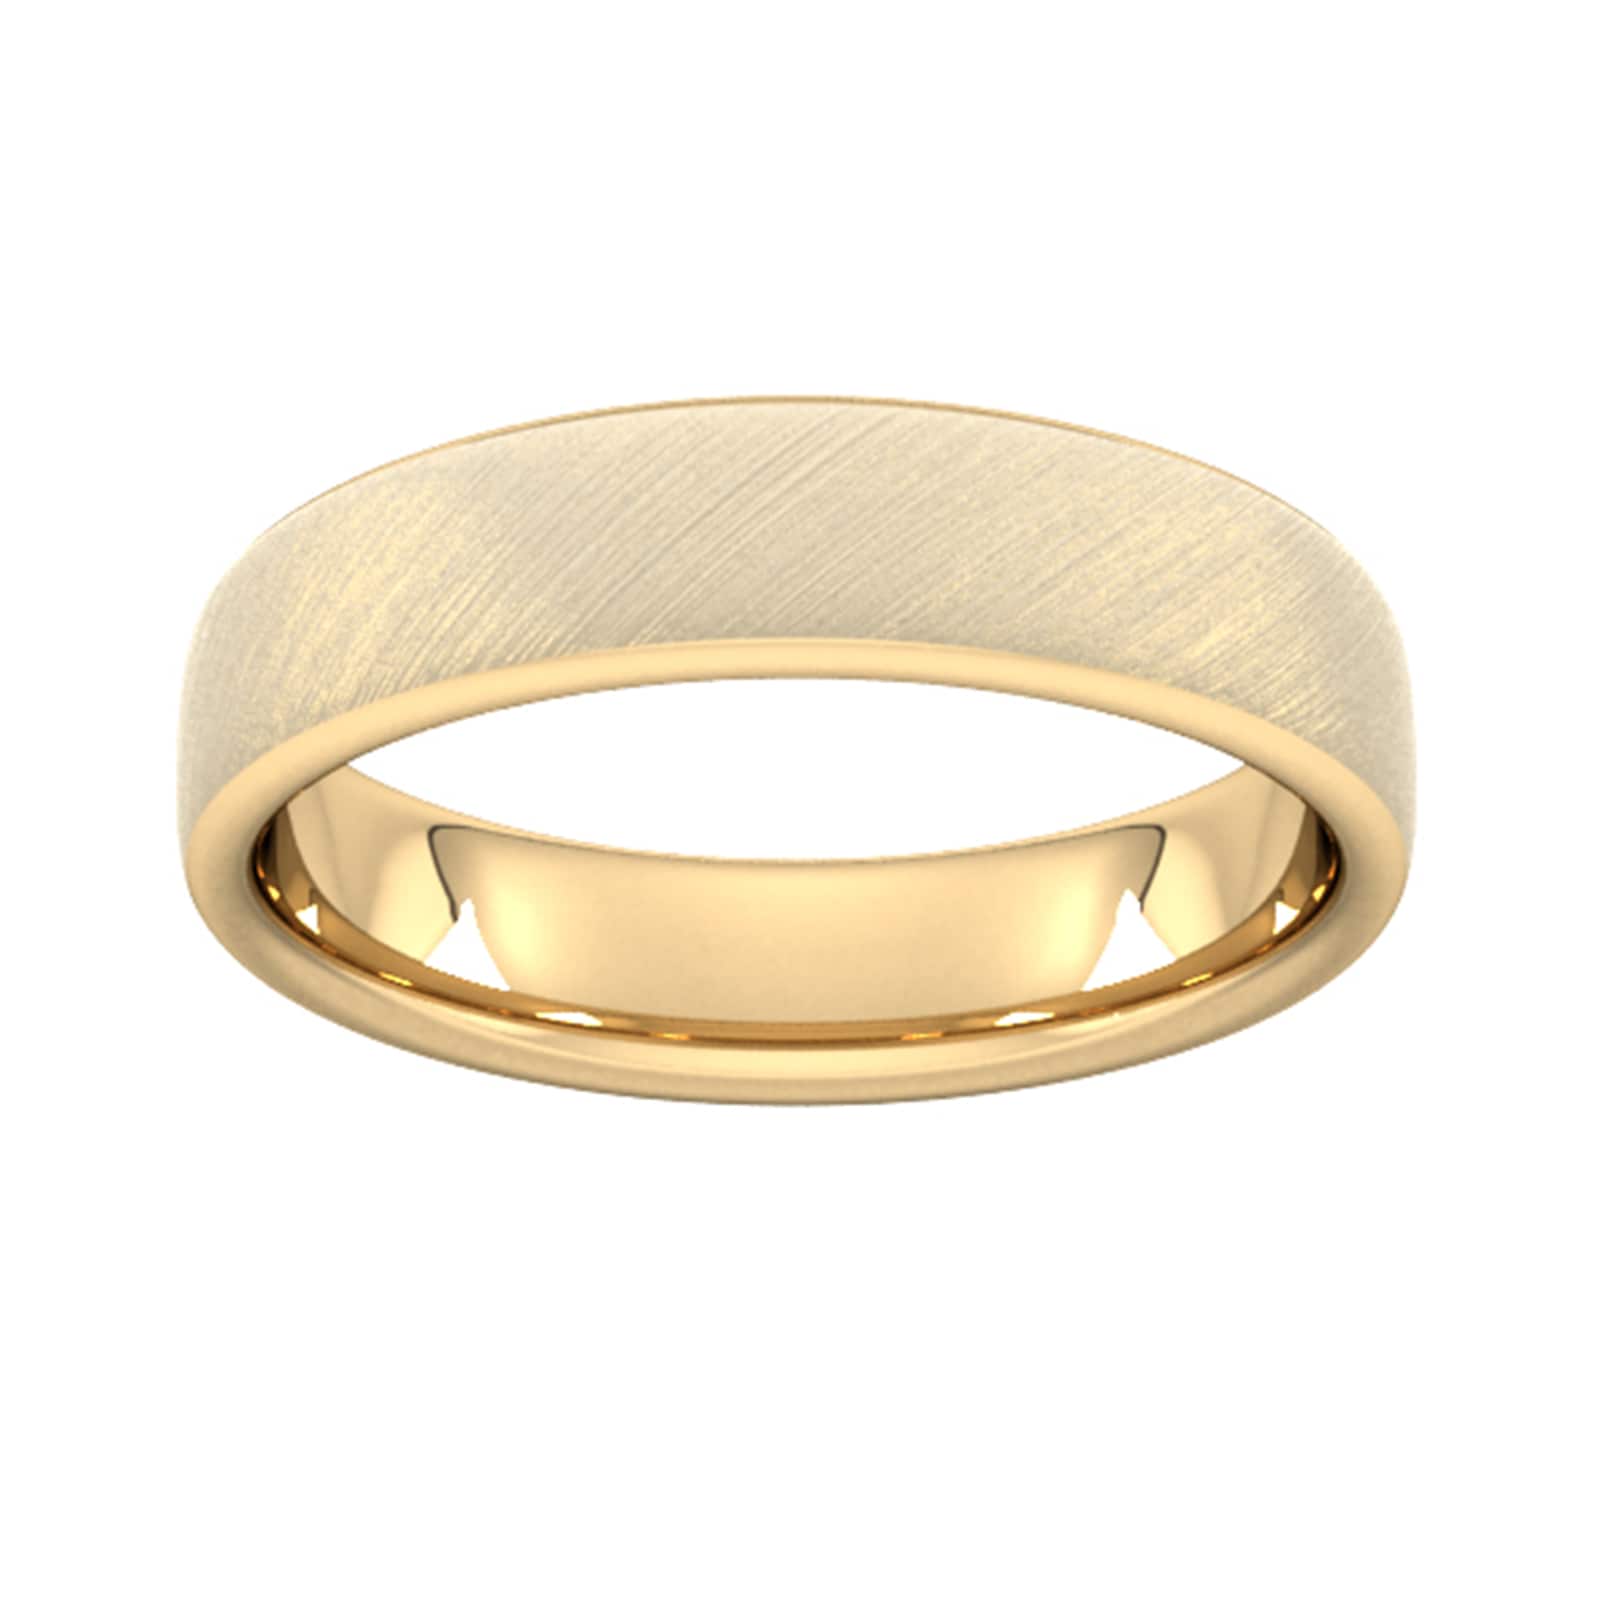 5mm D Shape Standard Diagonal Matt Finish Wedding Ring In 18 Carat Yellow Gold - Ring Size L